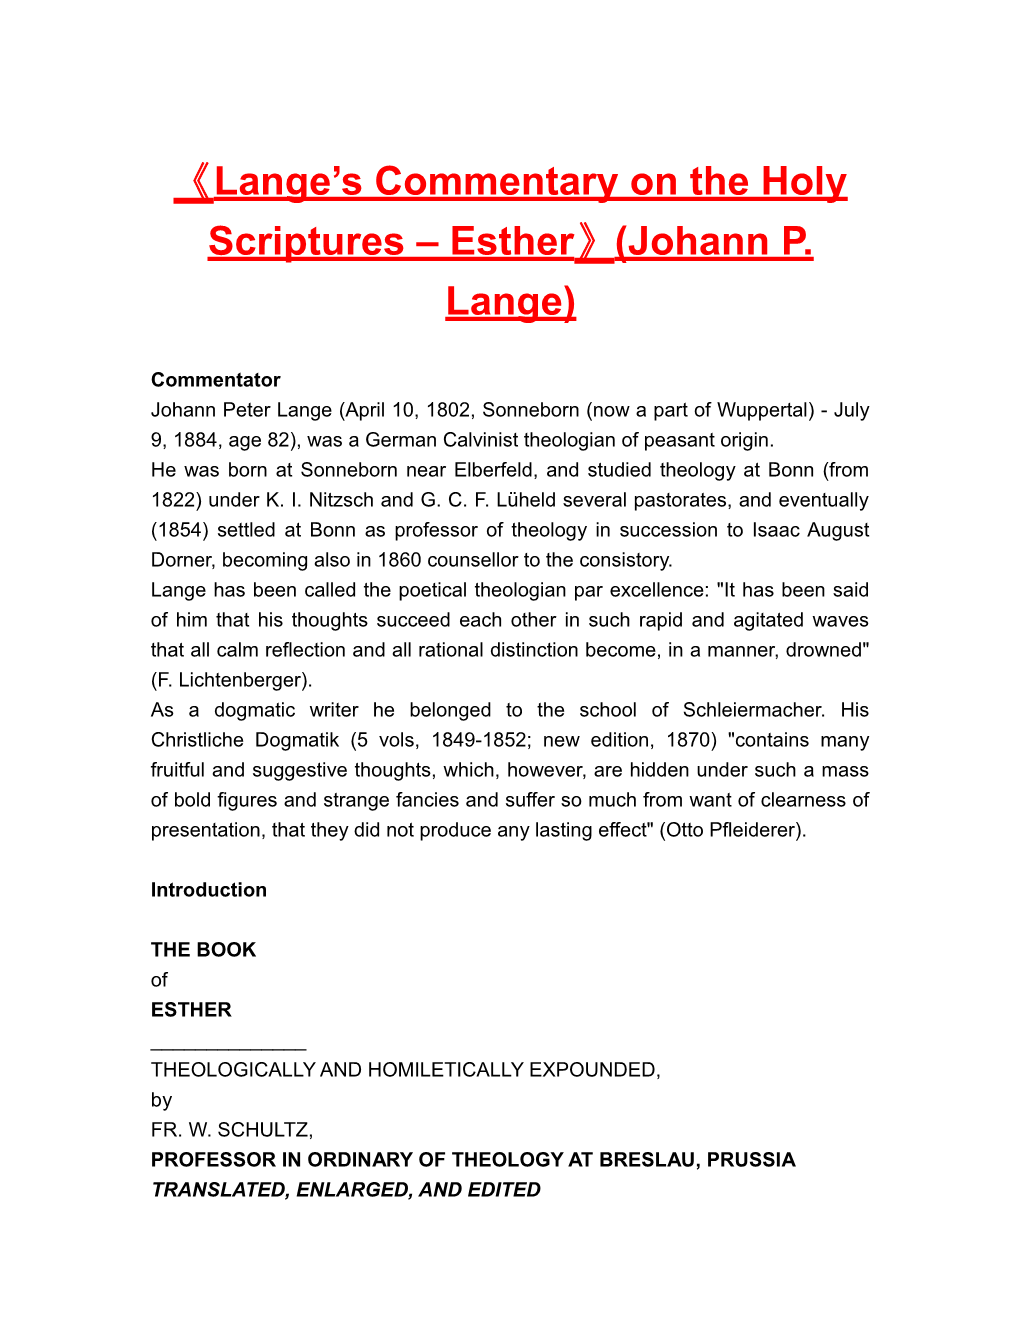 Lange S Commentary on the Holyscriptures Esther (Johann P. Lange)